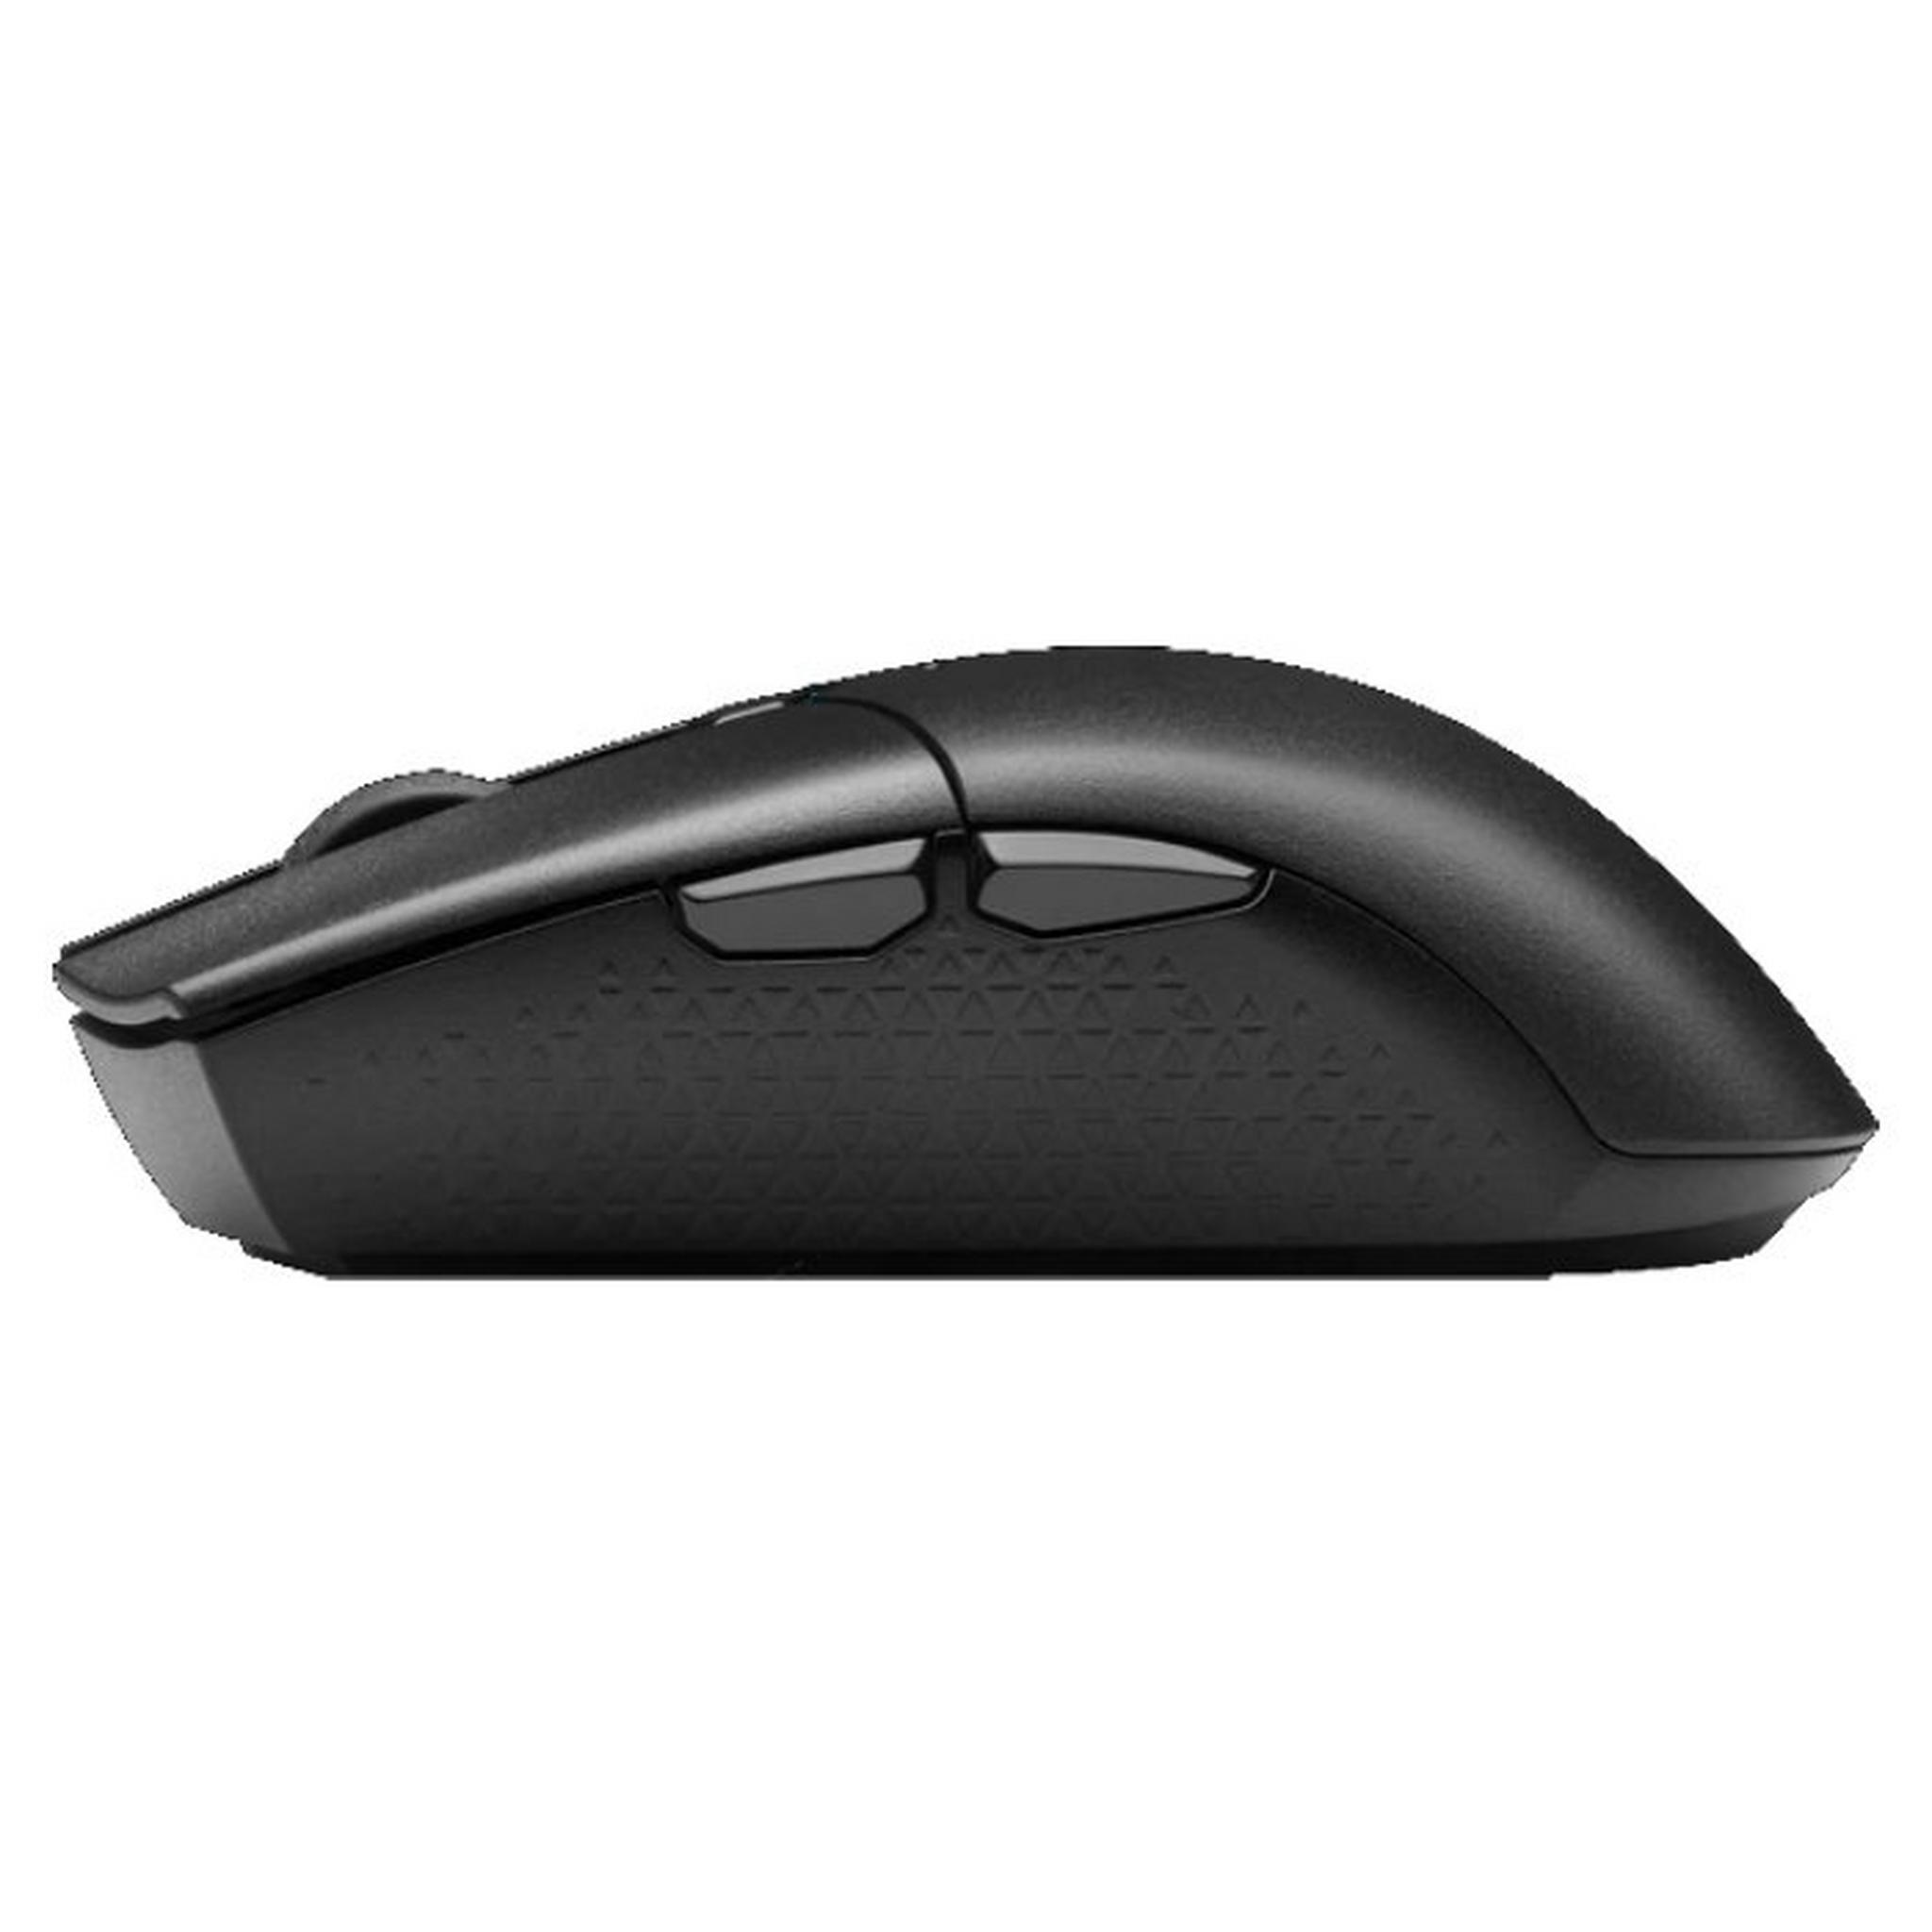 Corsair Katar Pro Wireless Gaming Mouse